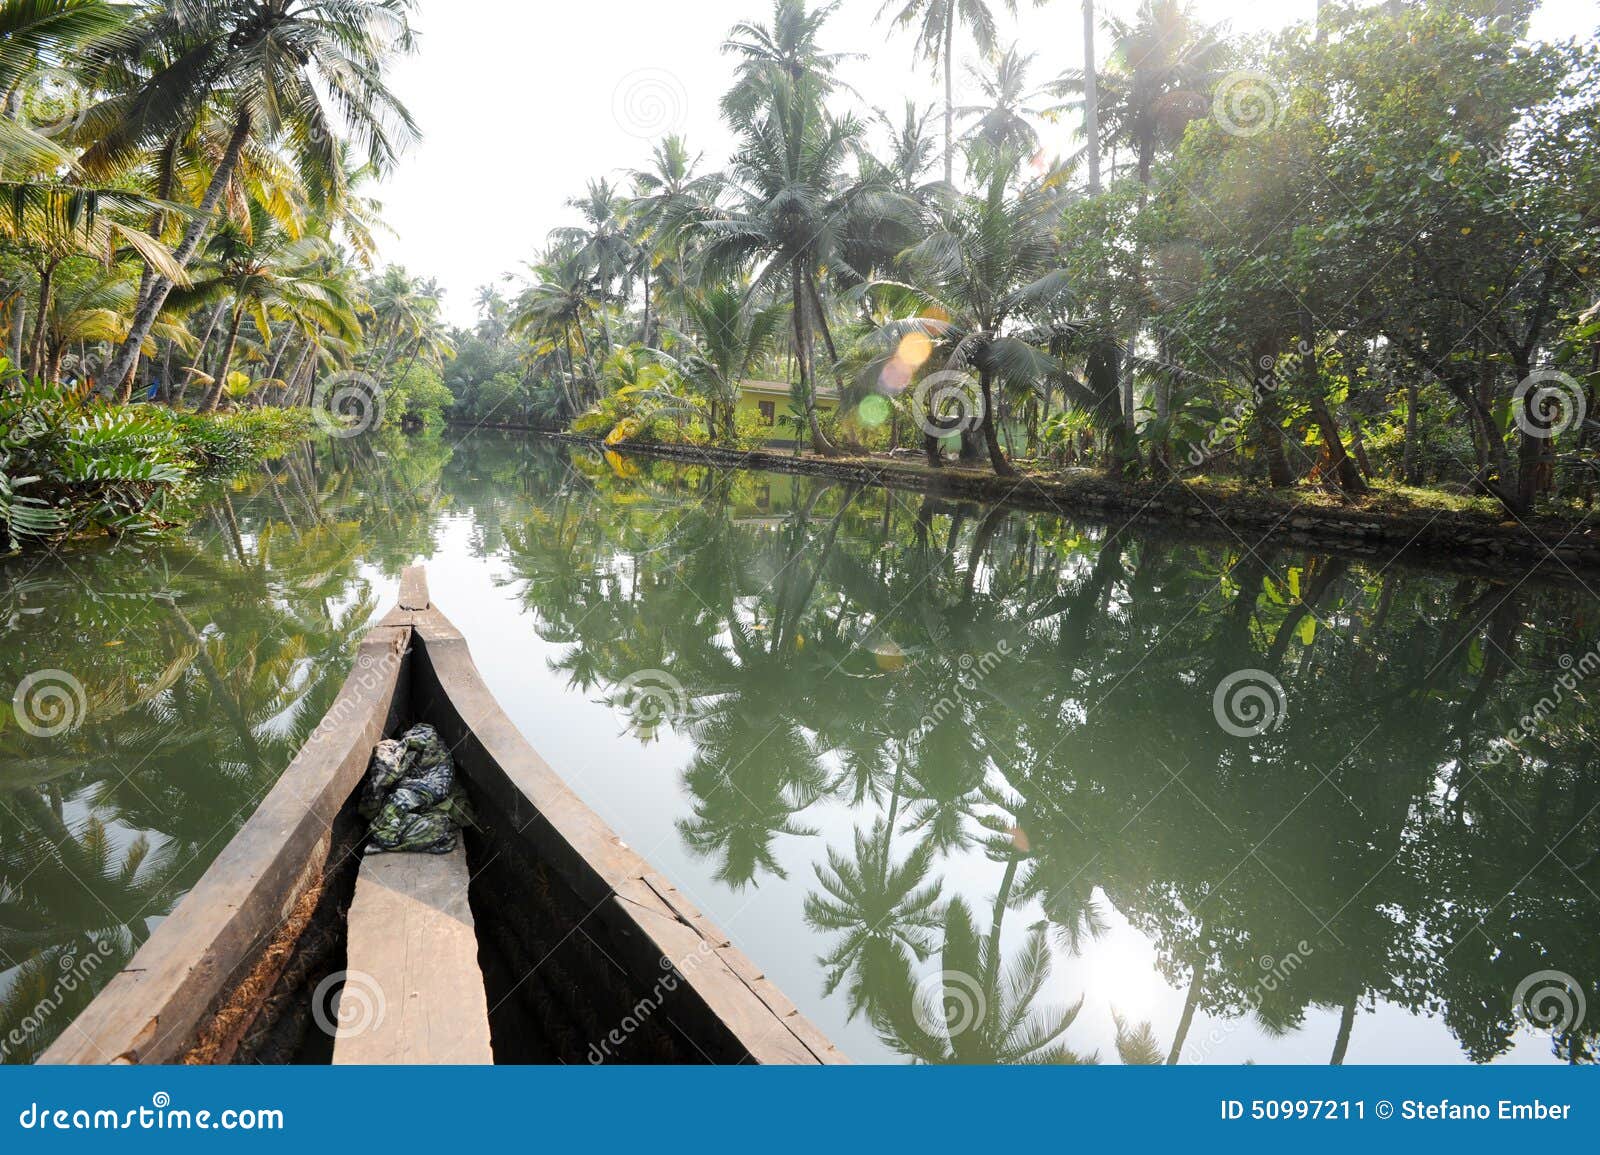 river of the backwaters at kollam